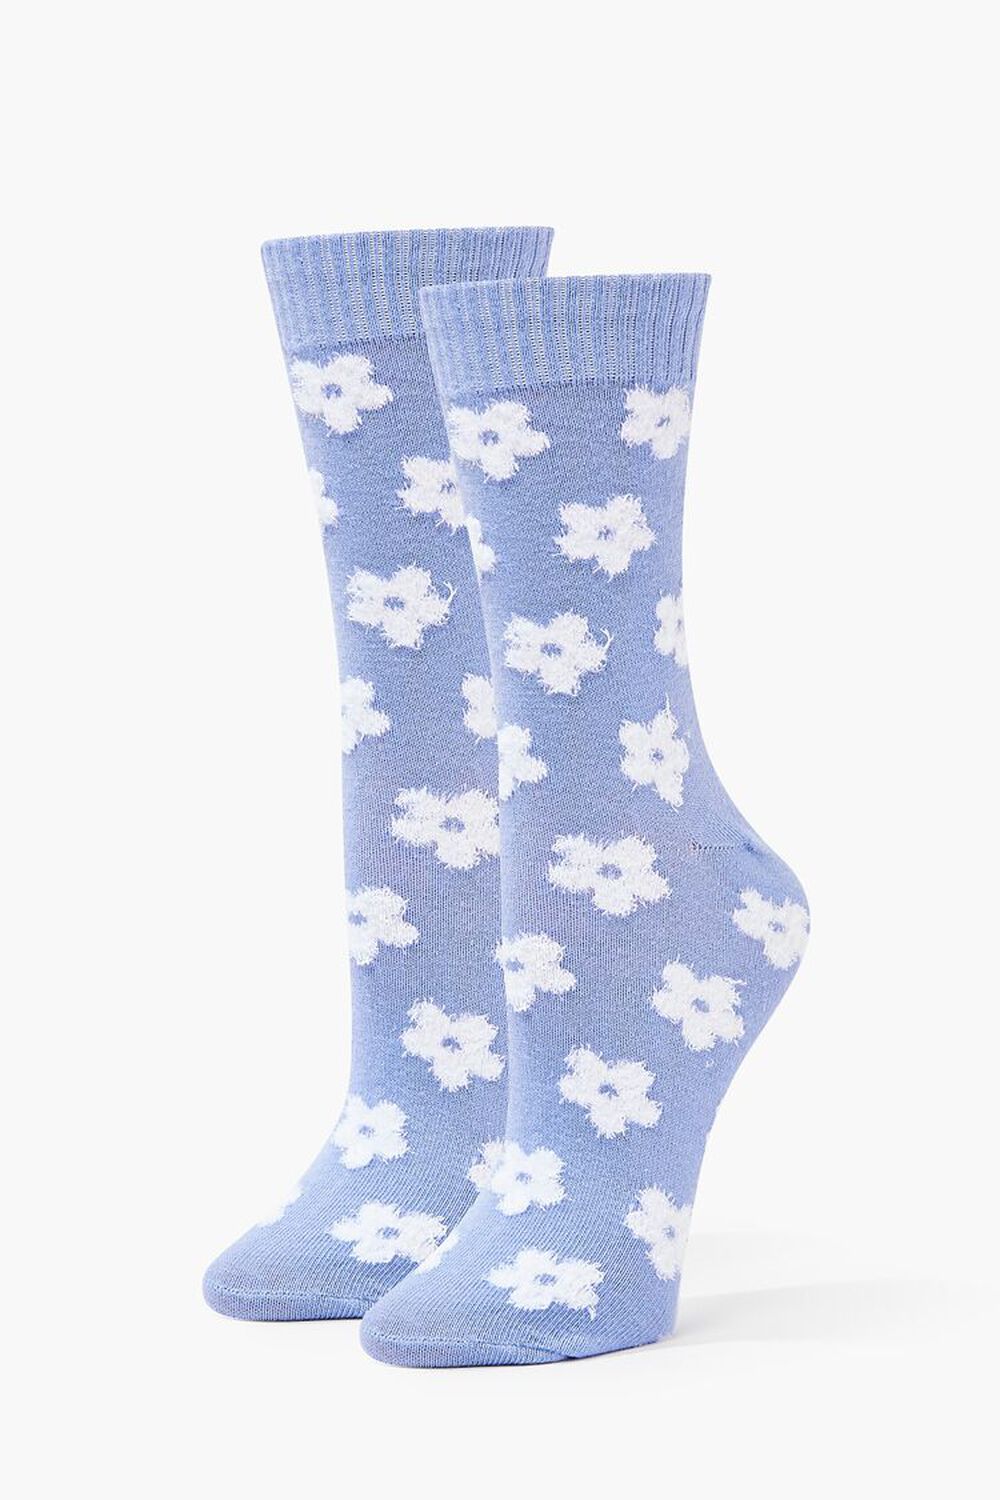 BLUE Daisy Print Crew Socks, image 1